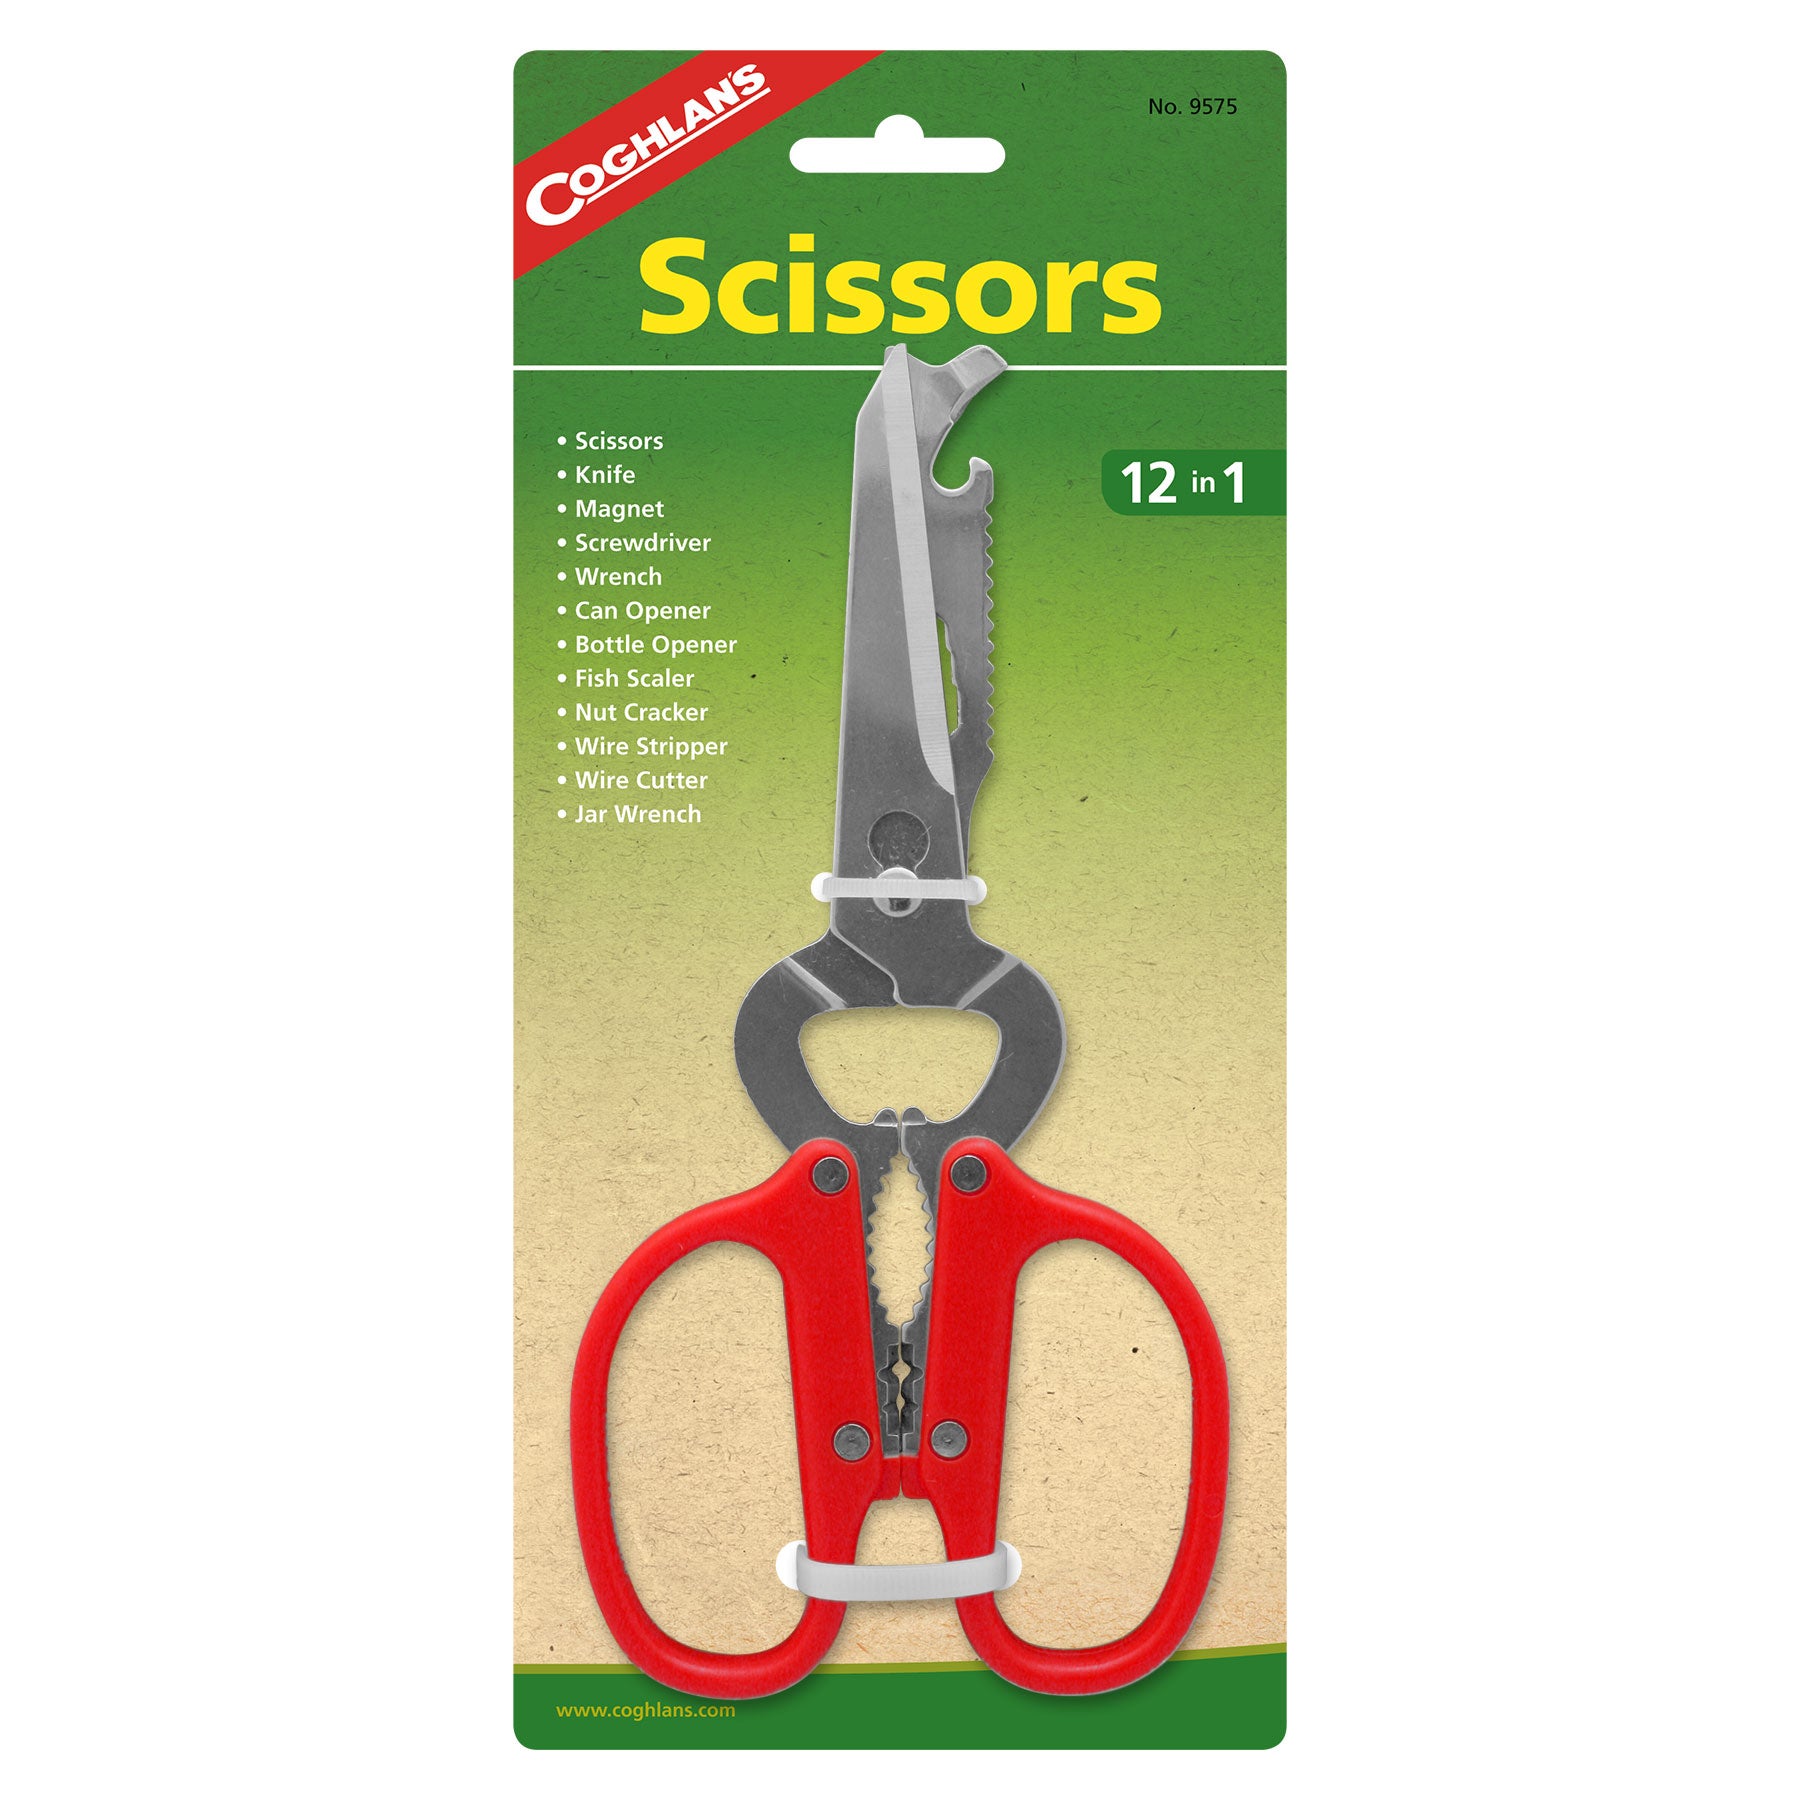 Coghlan's 12-in-1 Scissors